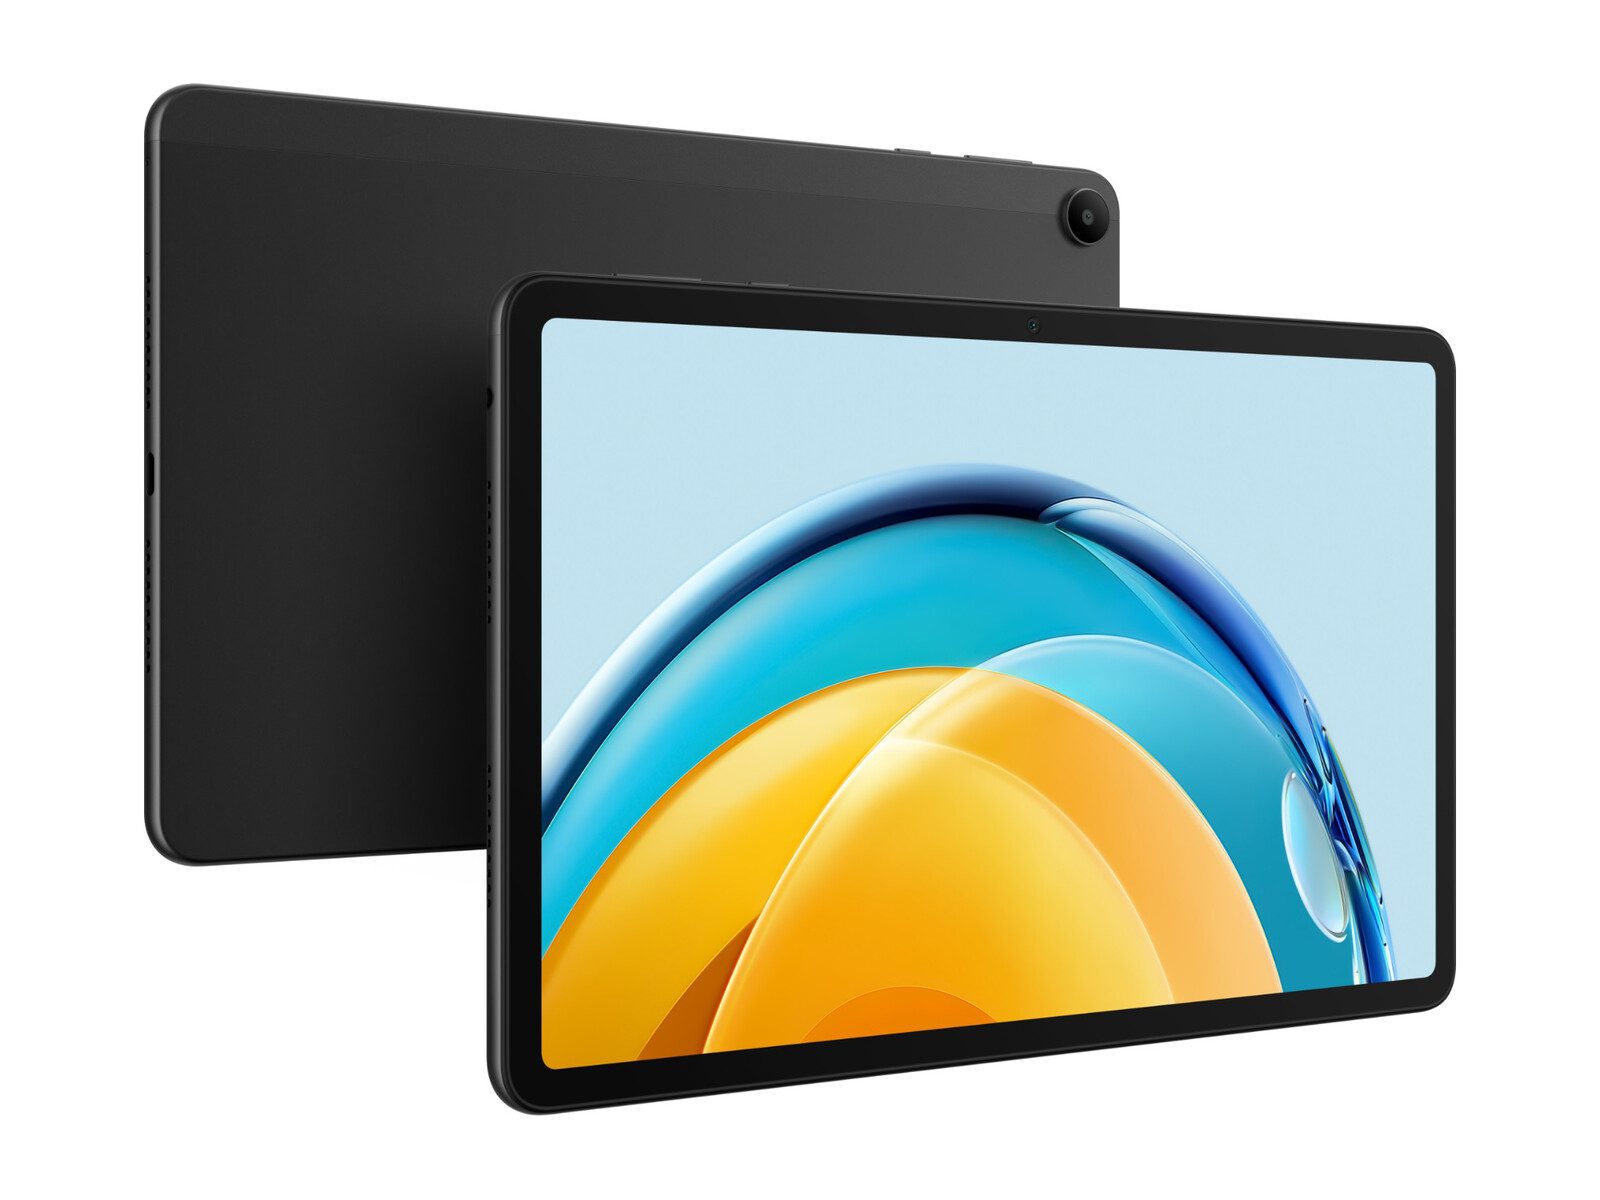 HUAWEI MatePad Pro Tablet 5G Version 10.8 Kirin 990 8GB 256GB Green